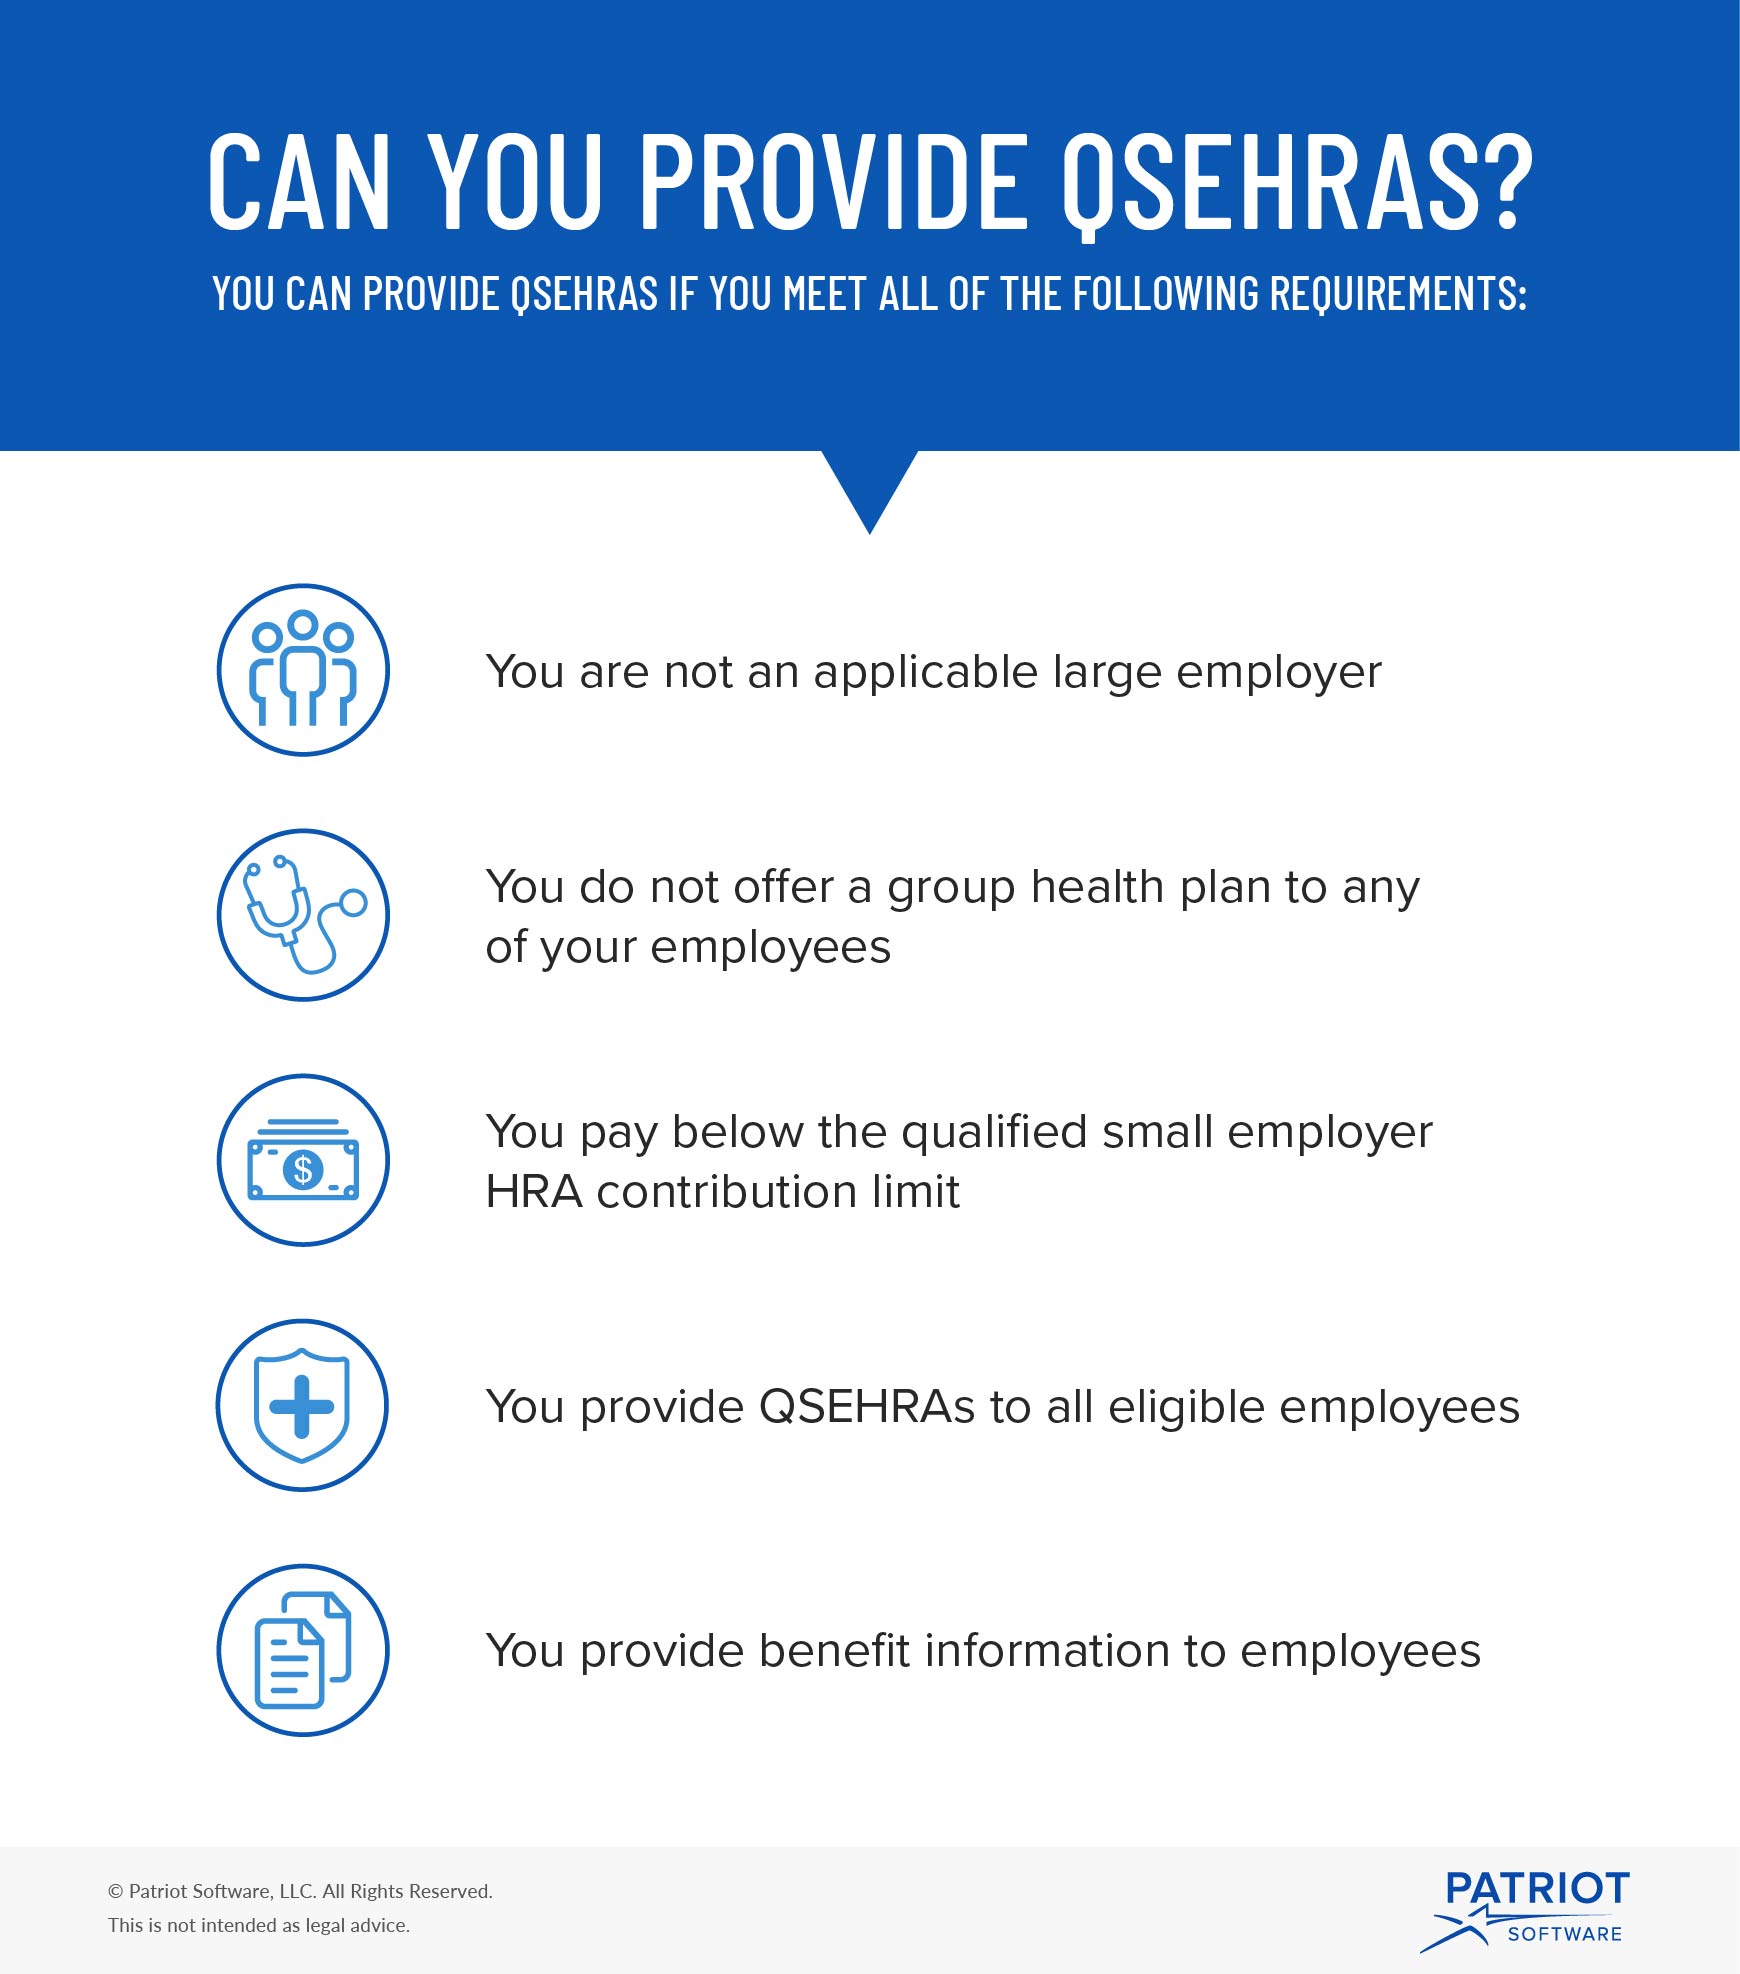 QSEHRA Plan: Health Insurance Alternative for Qualifying Employers